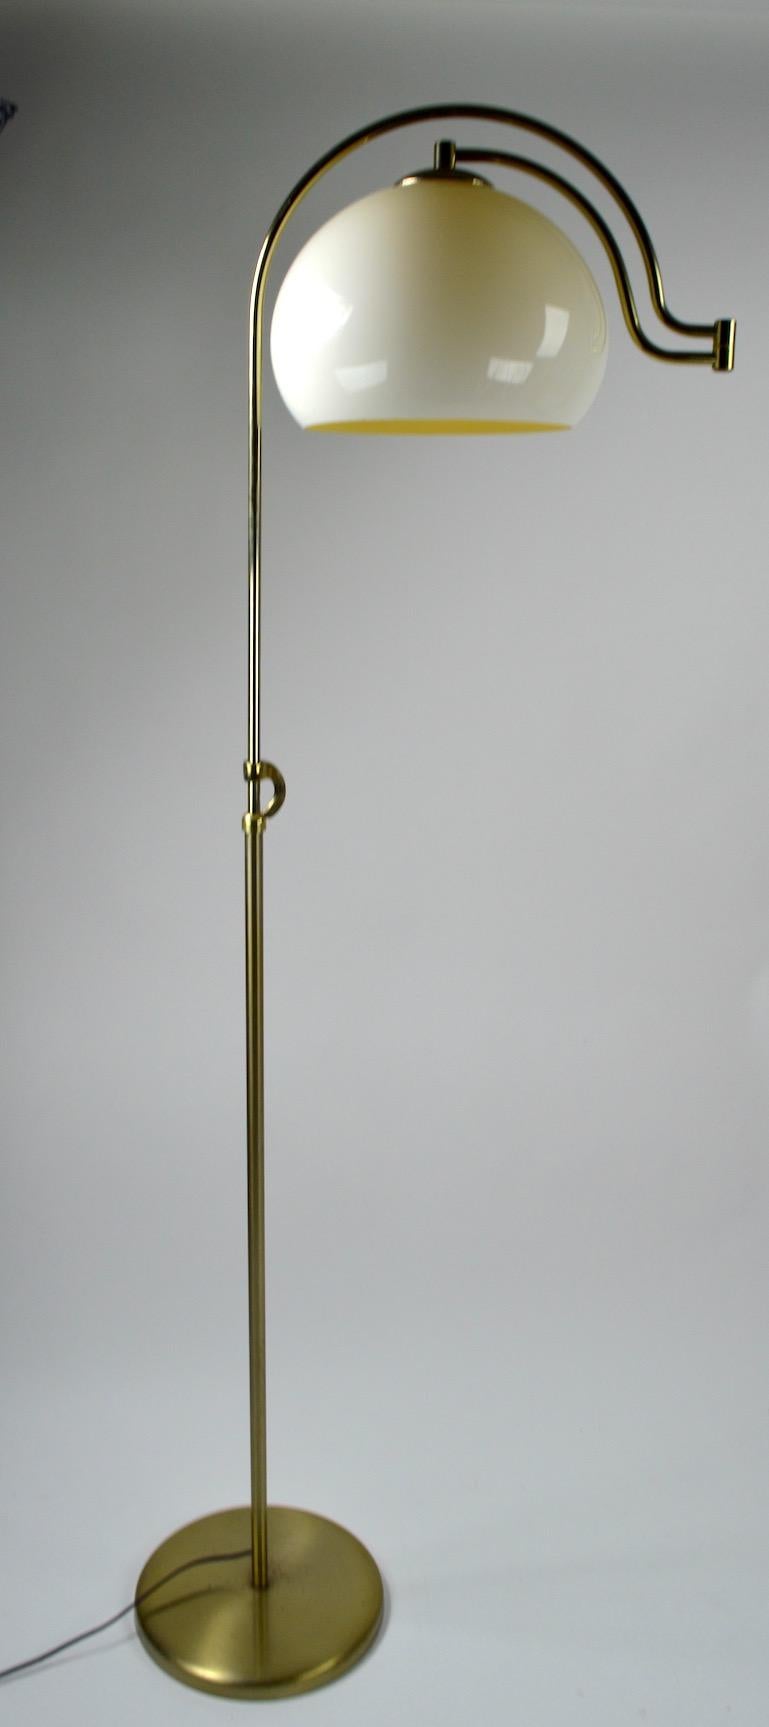 Adjustable Swing Arm Floor Lamp by Laurel 6